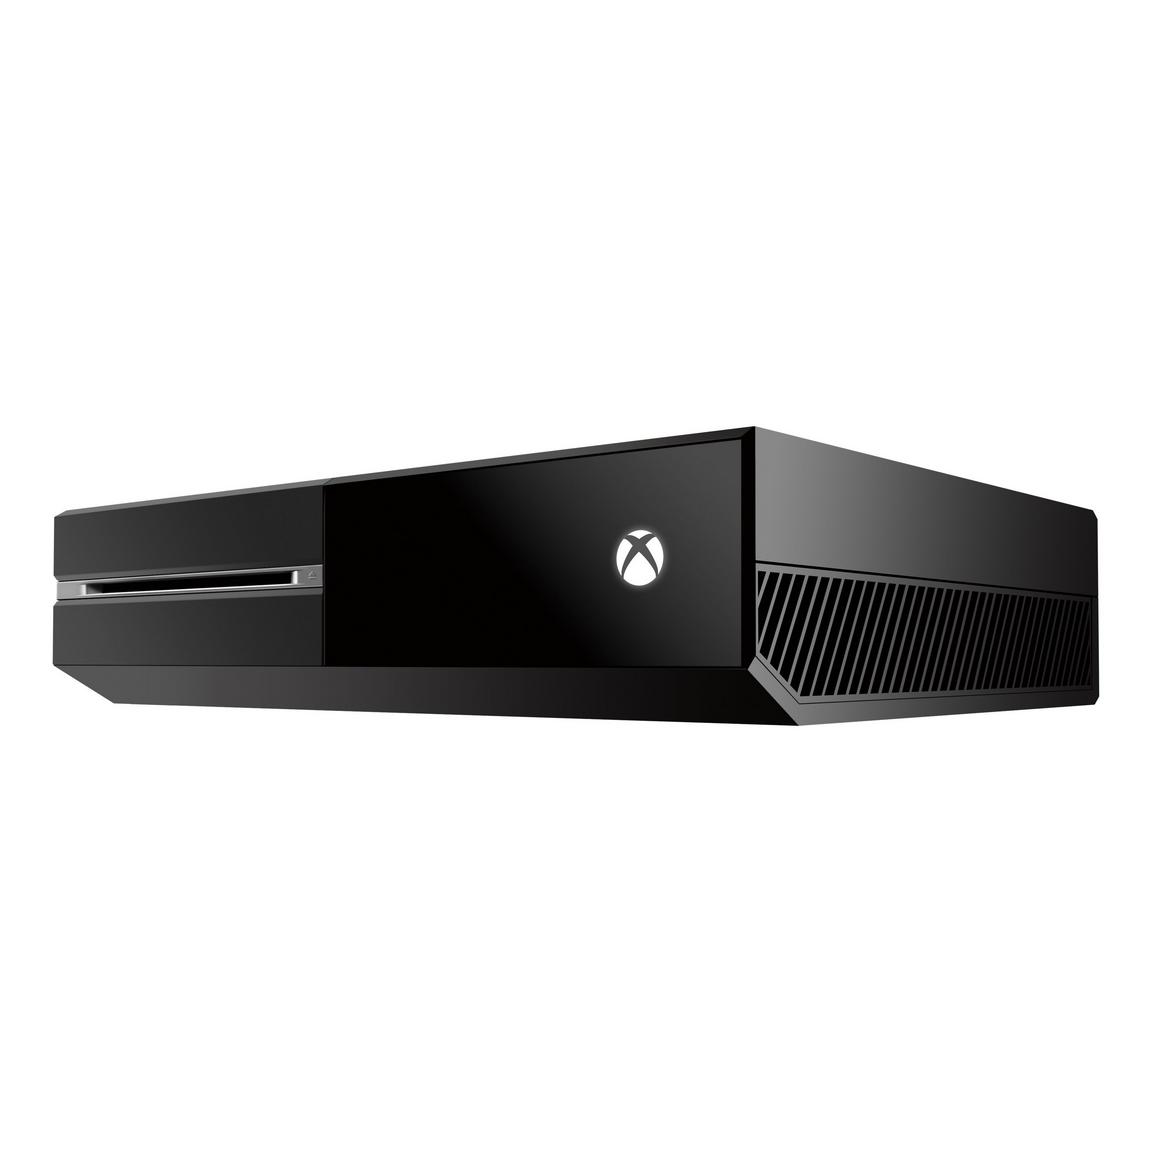 Xbox One 500 GB Black Console - (CIB) (Xbox One)